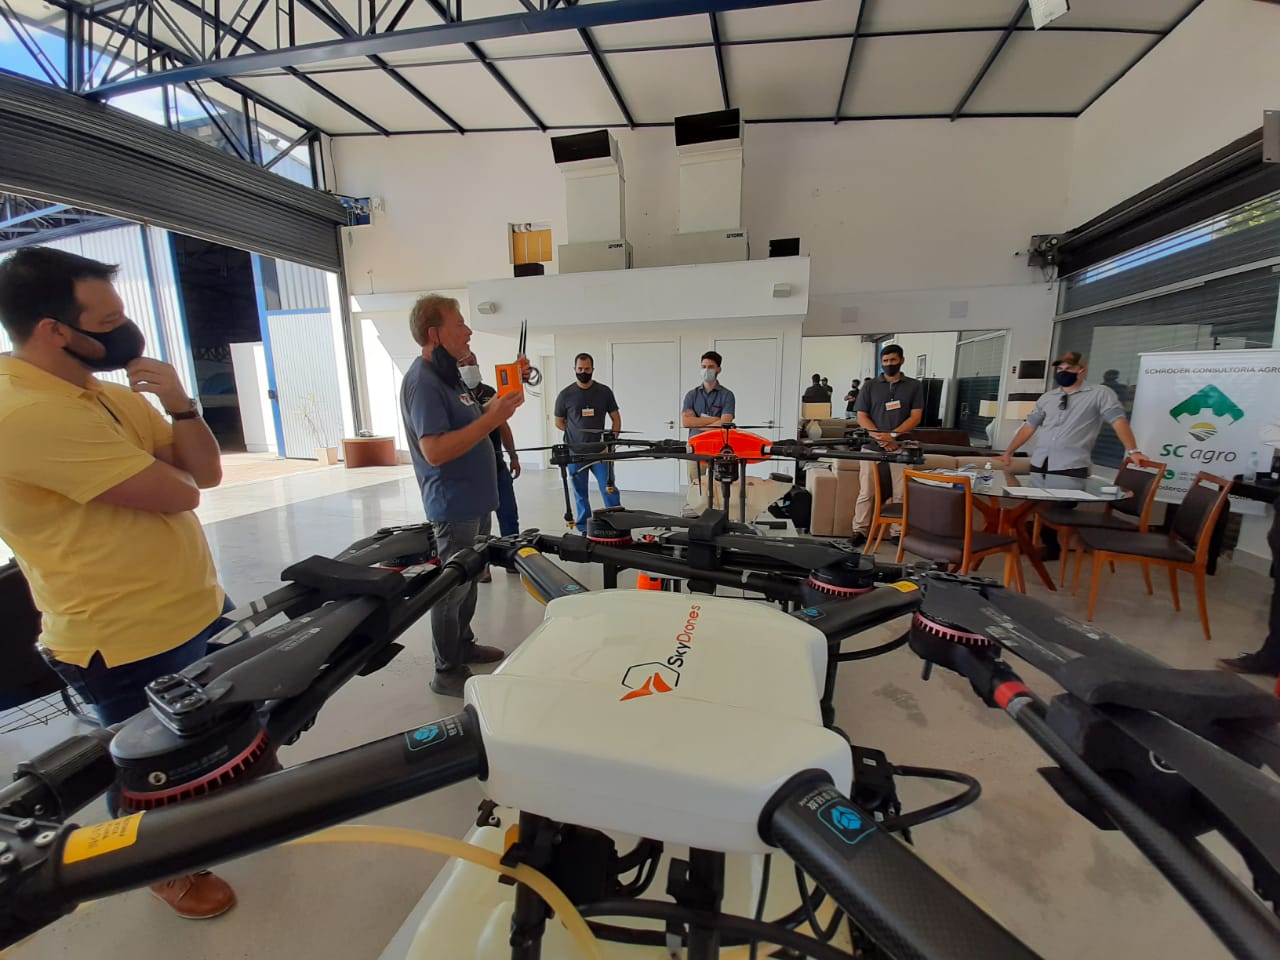 JFL drone - #schroeder #santacatarina #santaebelacatarina